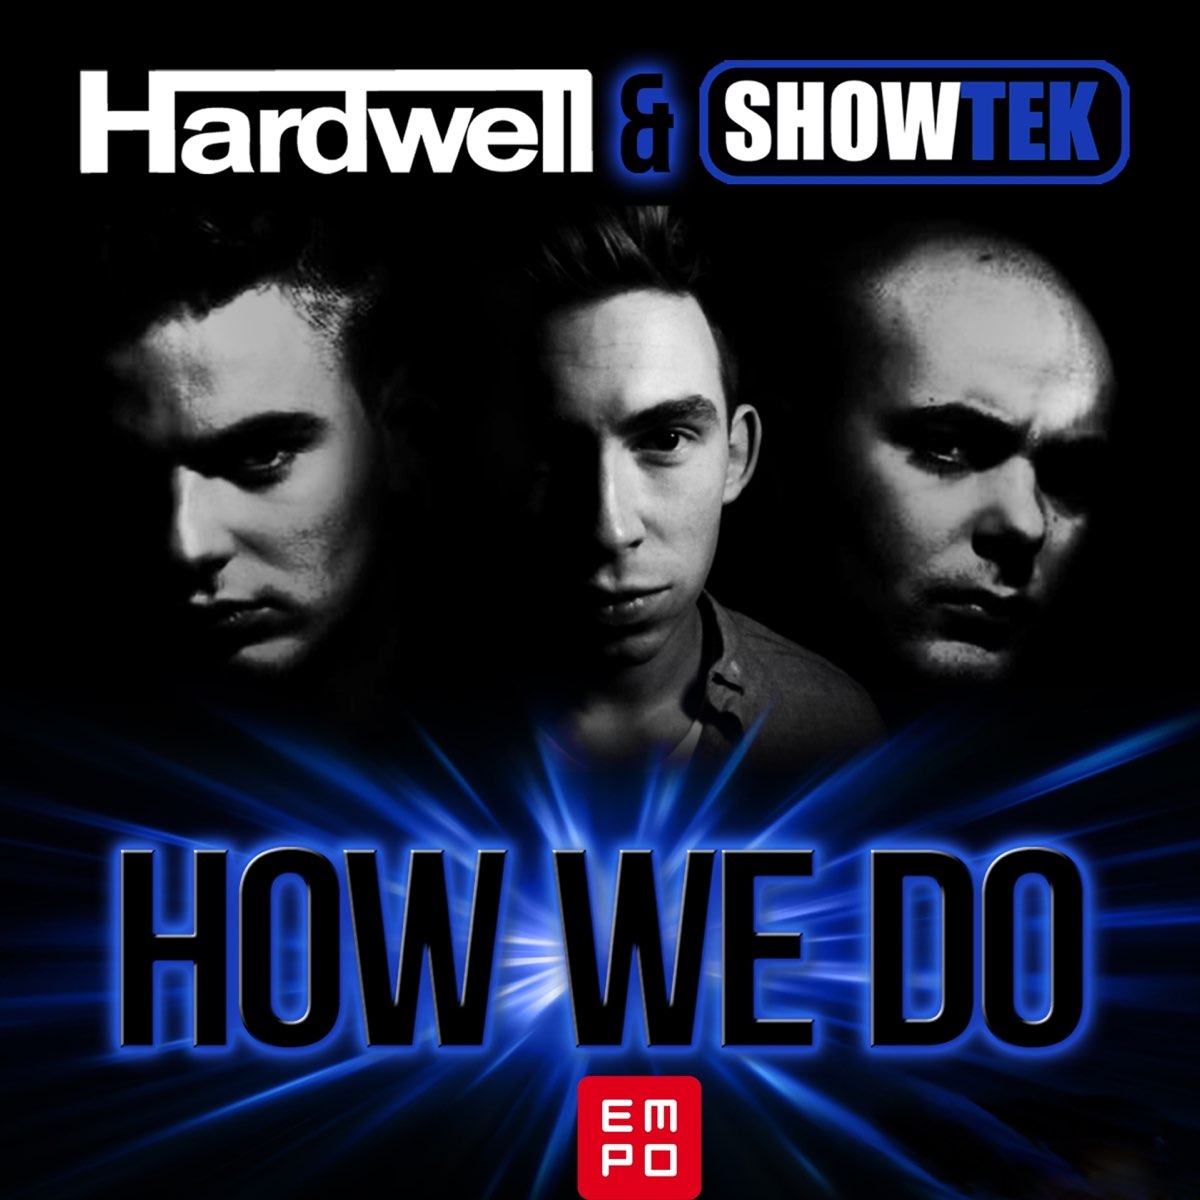 How We Do - Single by Hardwell & Showtek on Apple Music